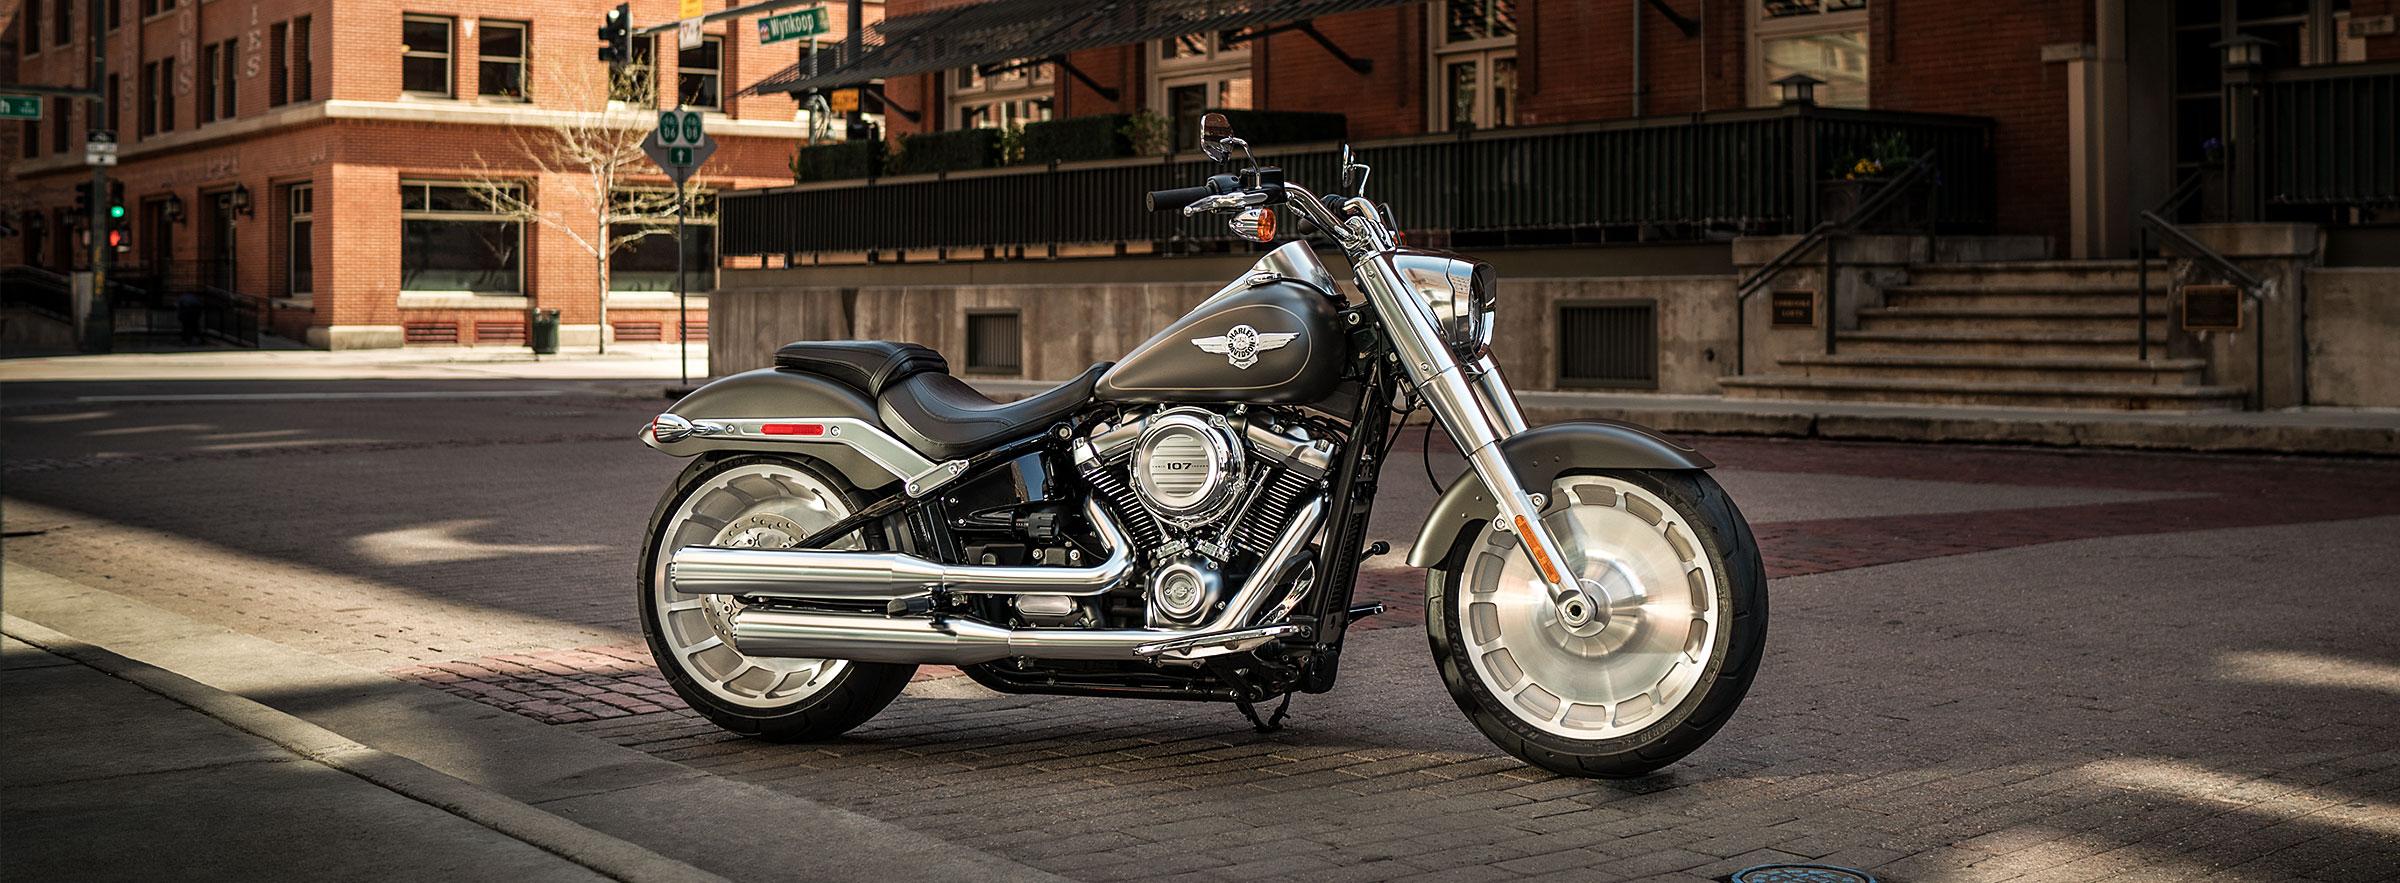 Fat Boy® Motorcycles. Pfaff Harley Davidson®